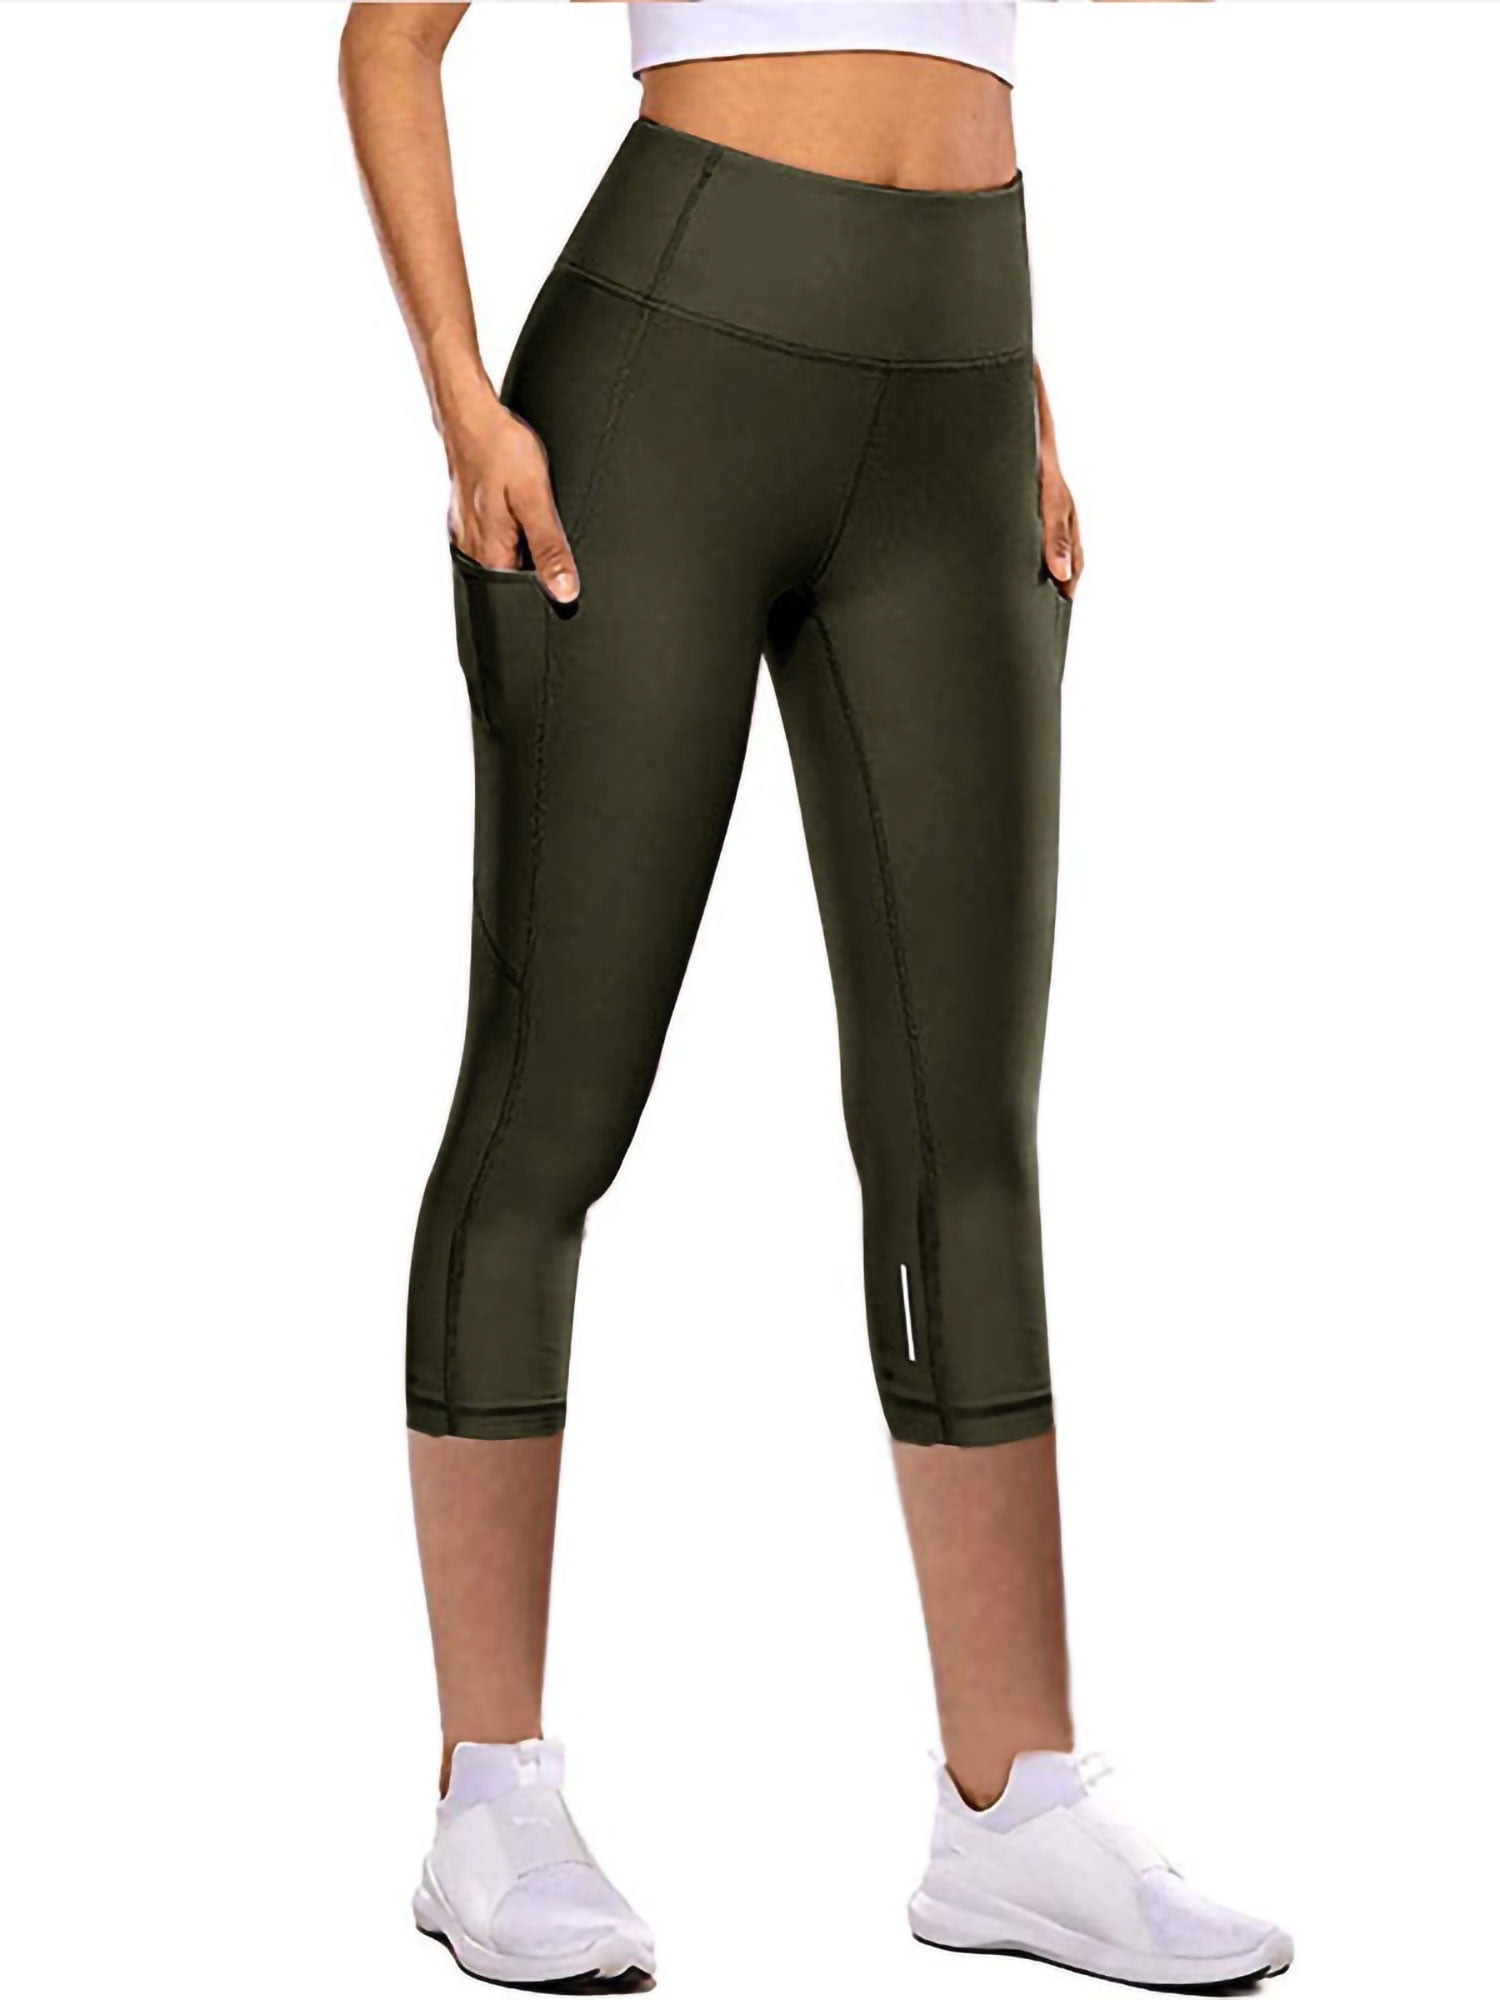 High Waist Tummy Control Capri Length Workout Pants for Yoga Running 2 Pack Capri Leggings with Pockets for Women 